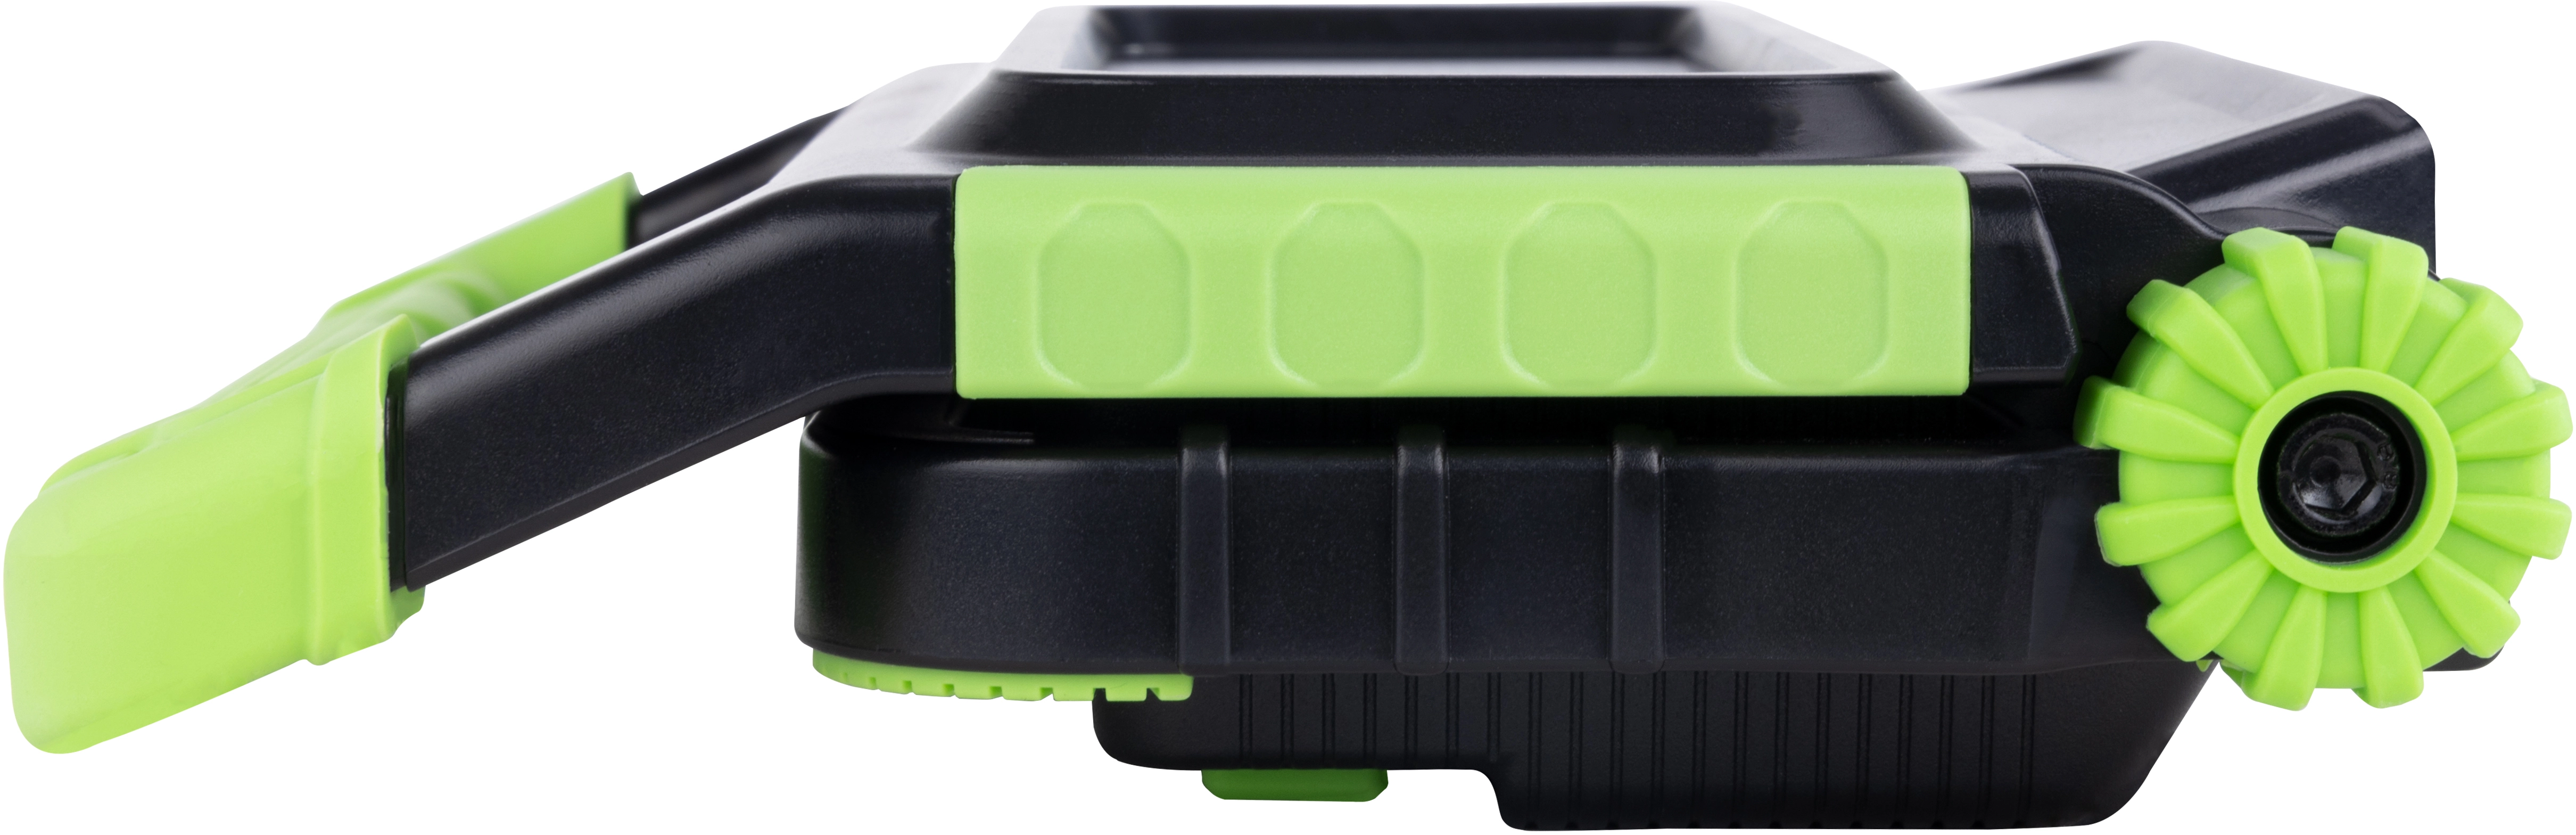 Warnblinkleuchte grün, Notfallleuchte LED mit Ladegerät, Akku - Metal Badge